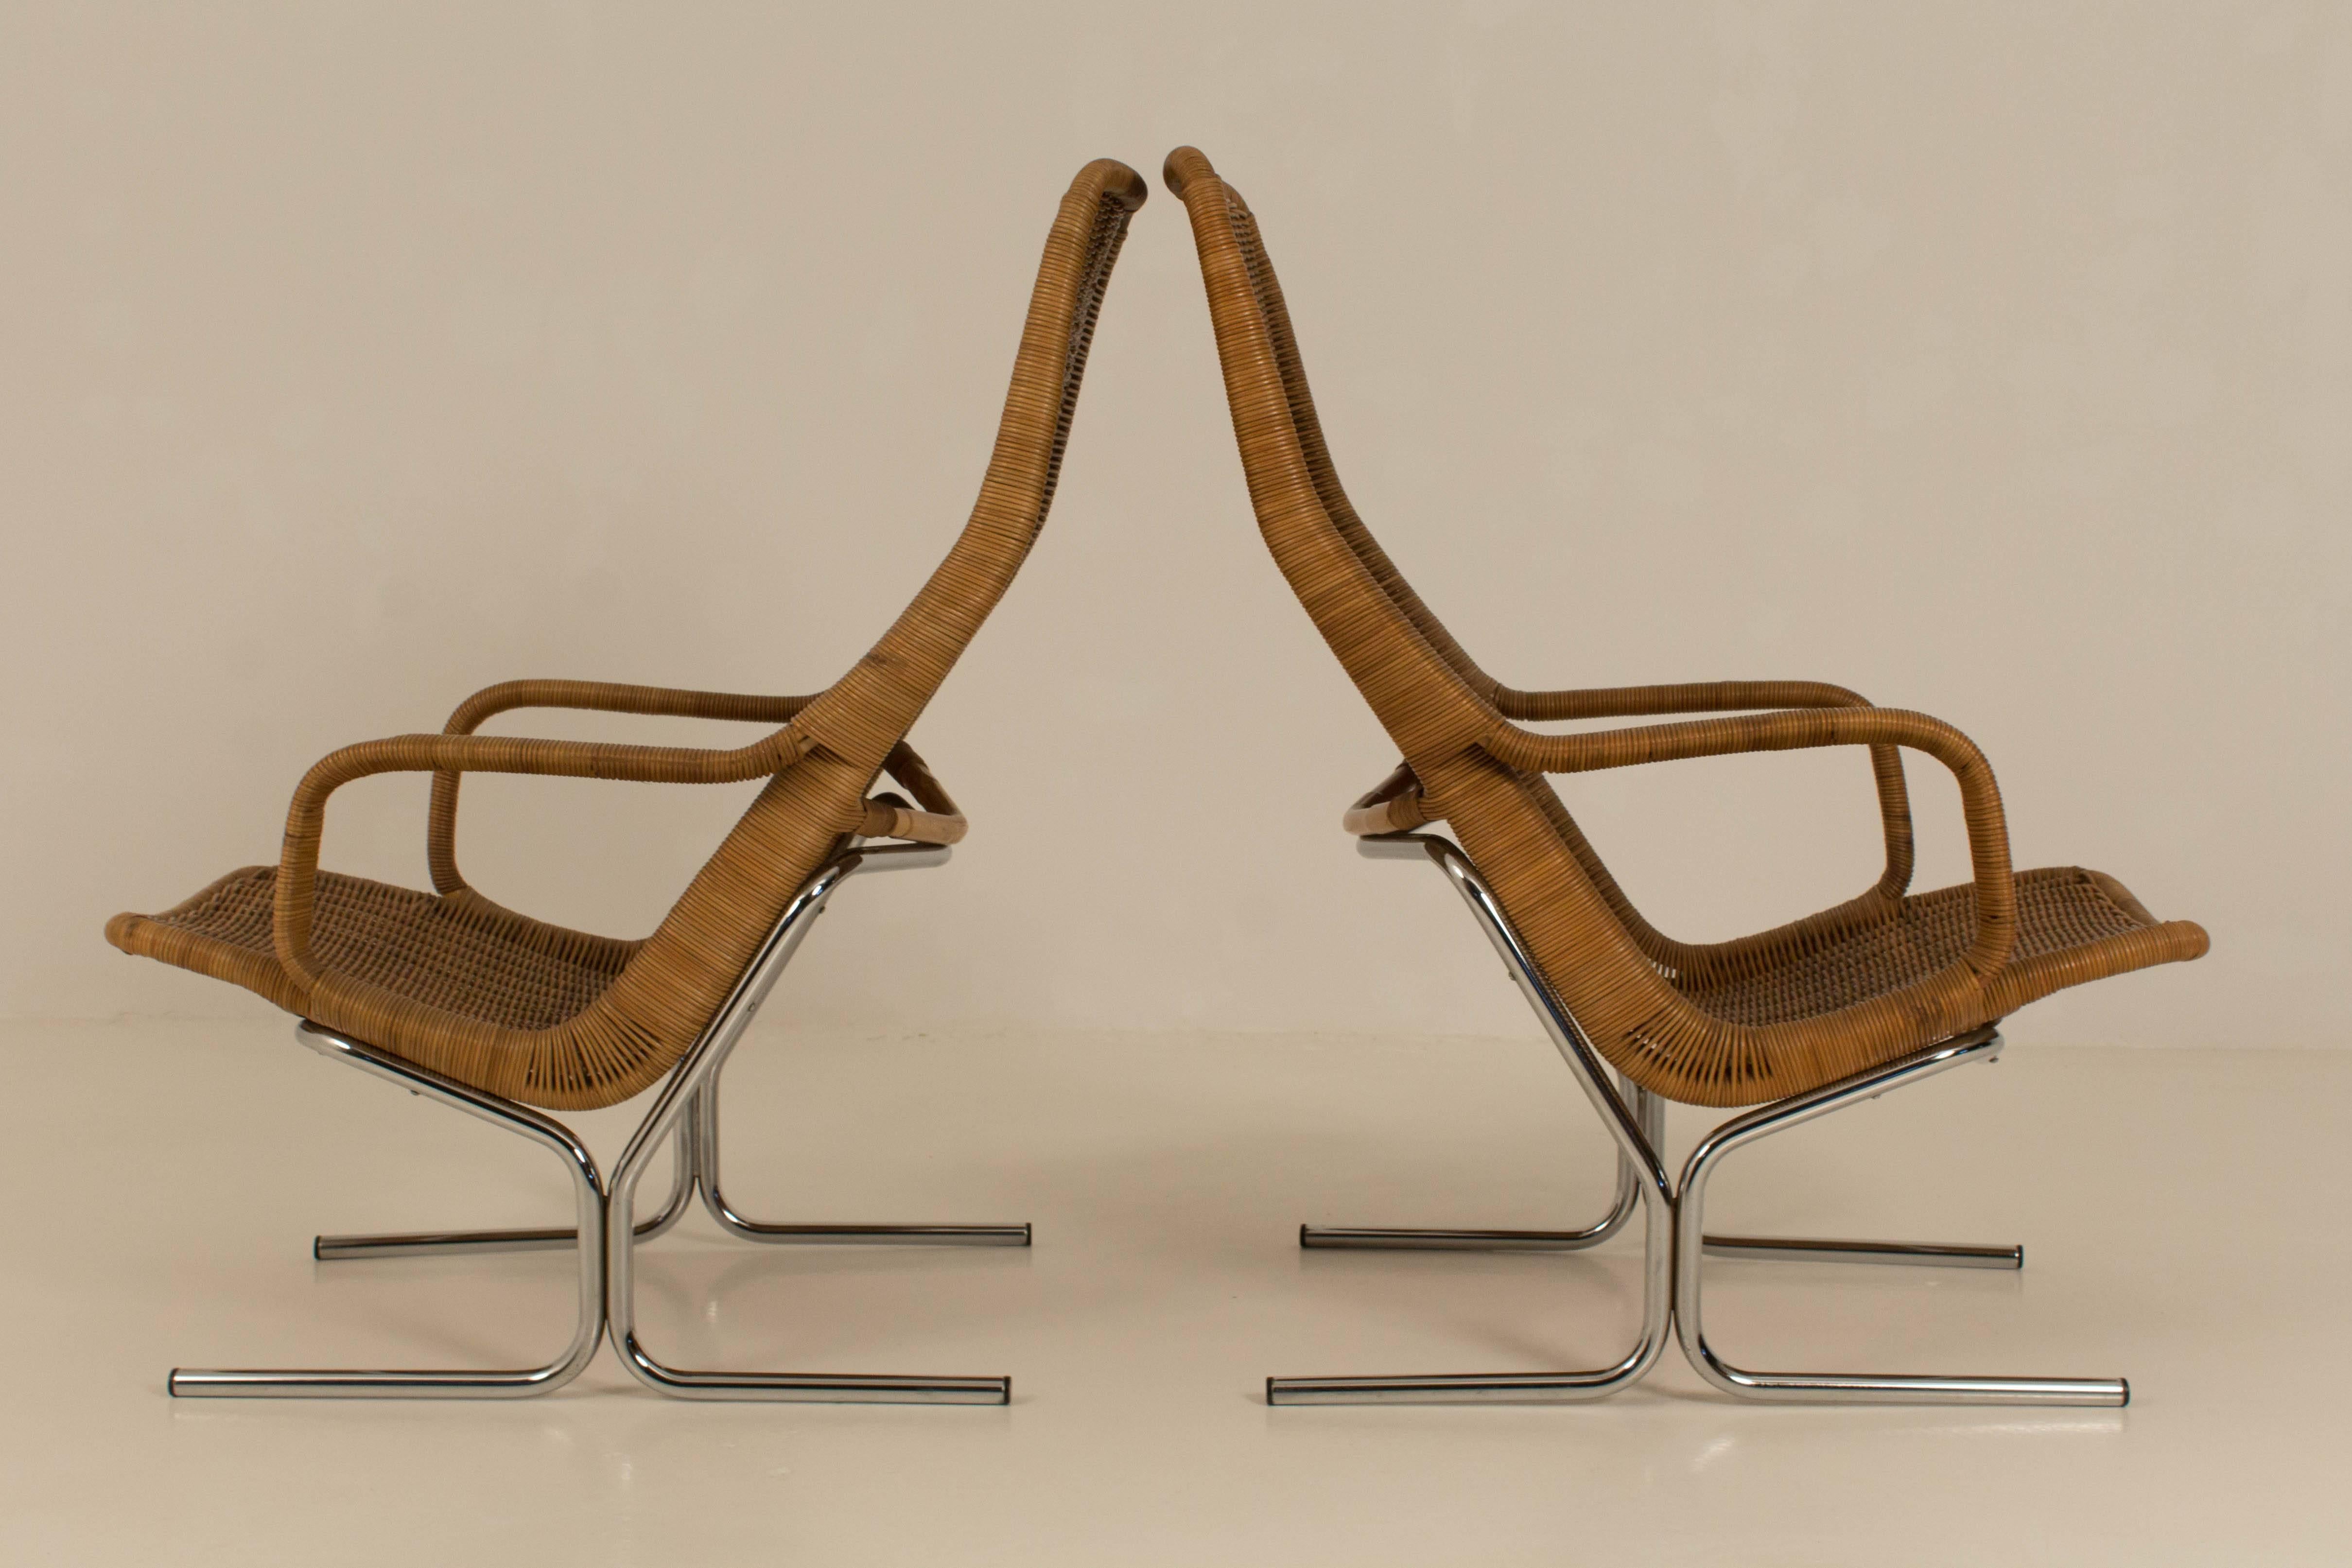 Pair of Mid-Century Modern lounge chairs by Dirk van Sliedregt.
Manufactured by Gebroeders Jonker Noordwolde.
Wicker and chrome are in very good condition!